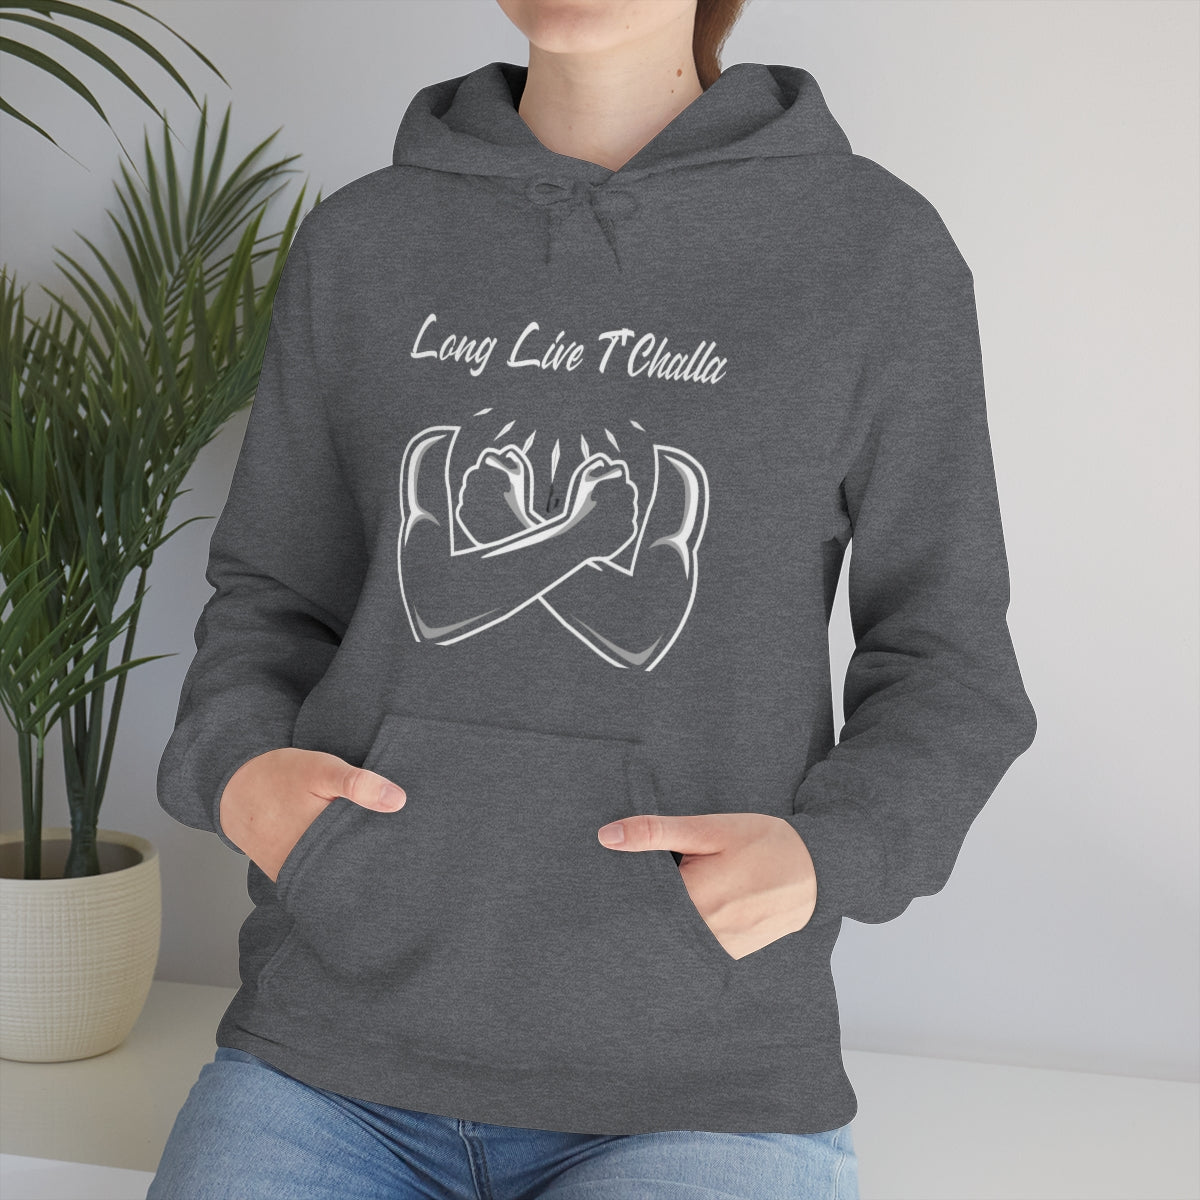 Long Live T'Challa Hooded Sweatshirt